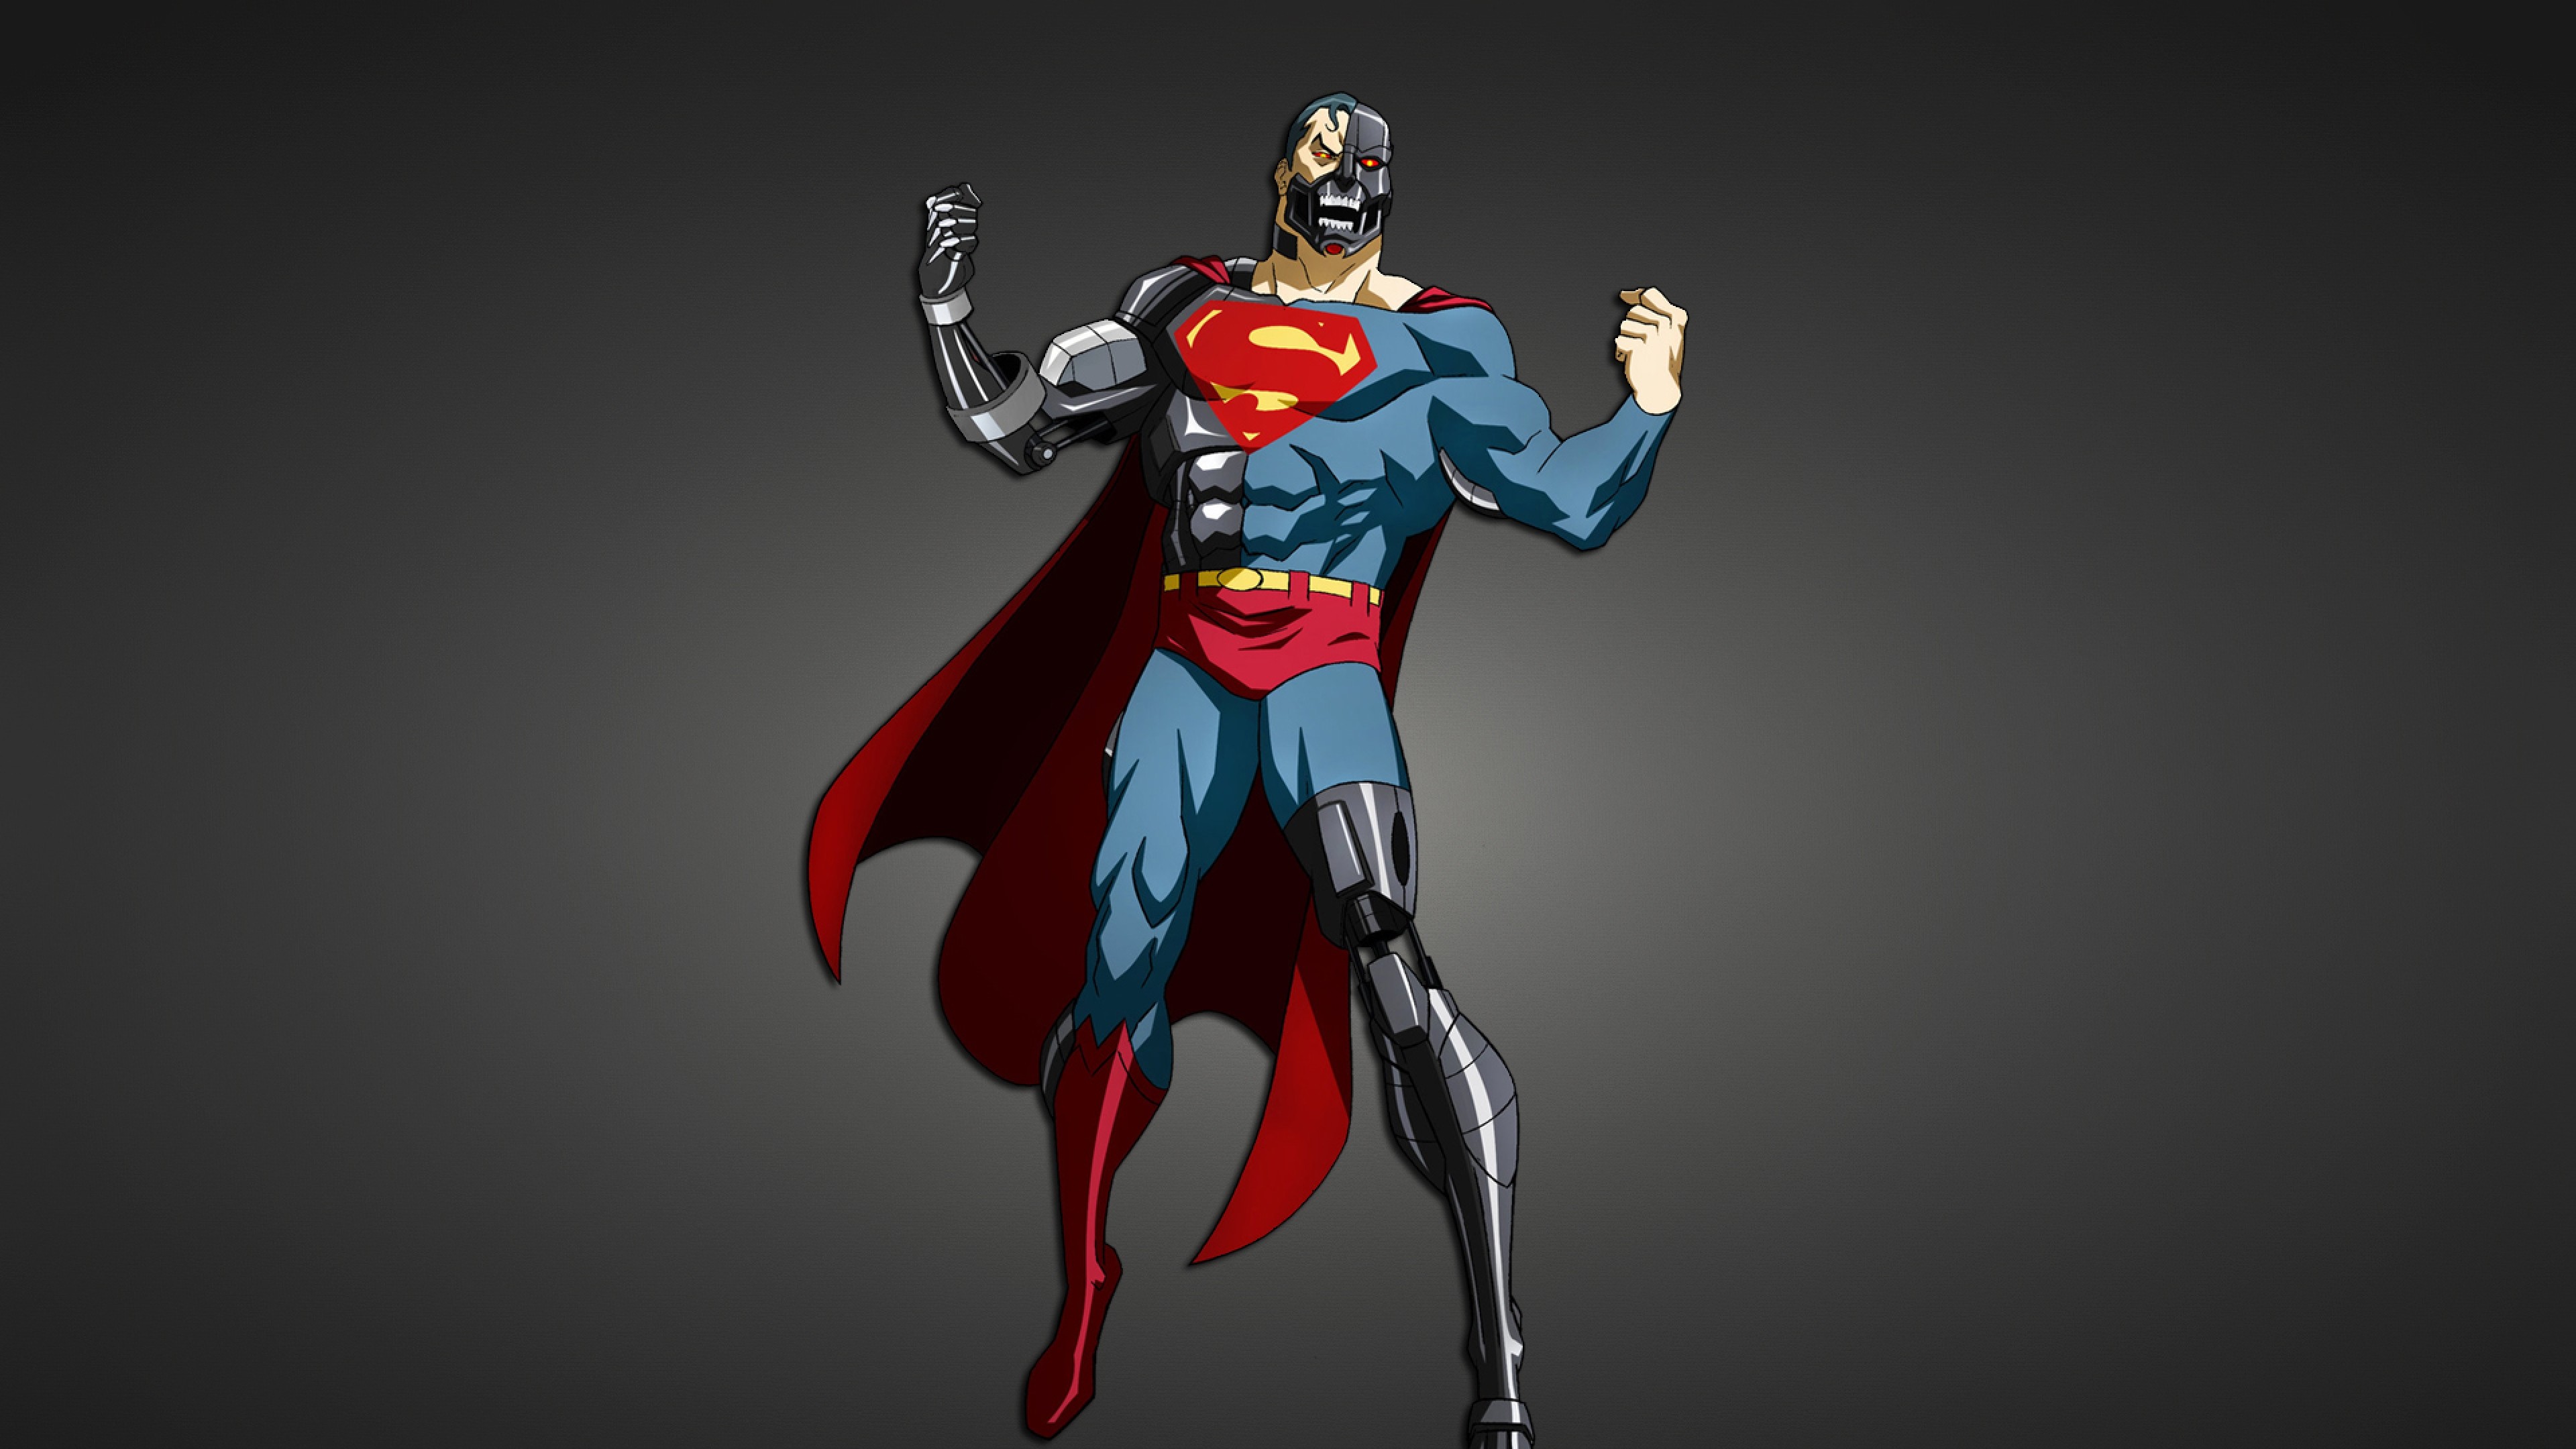 3840x2160 Superman superhero cyborg images wallpapers.